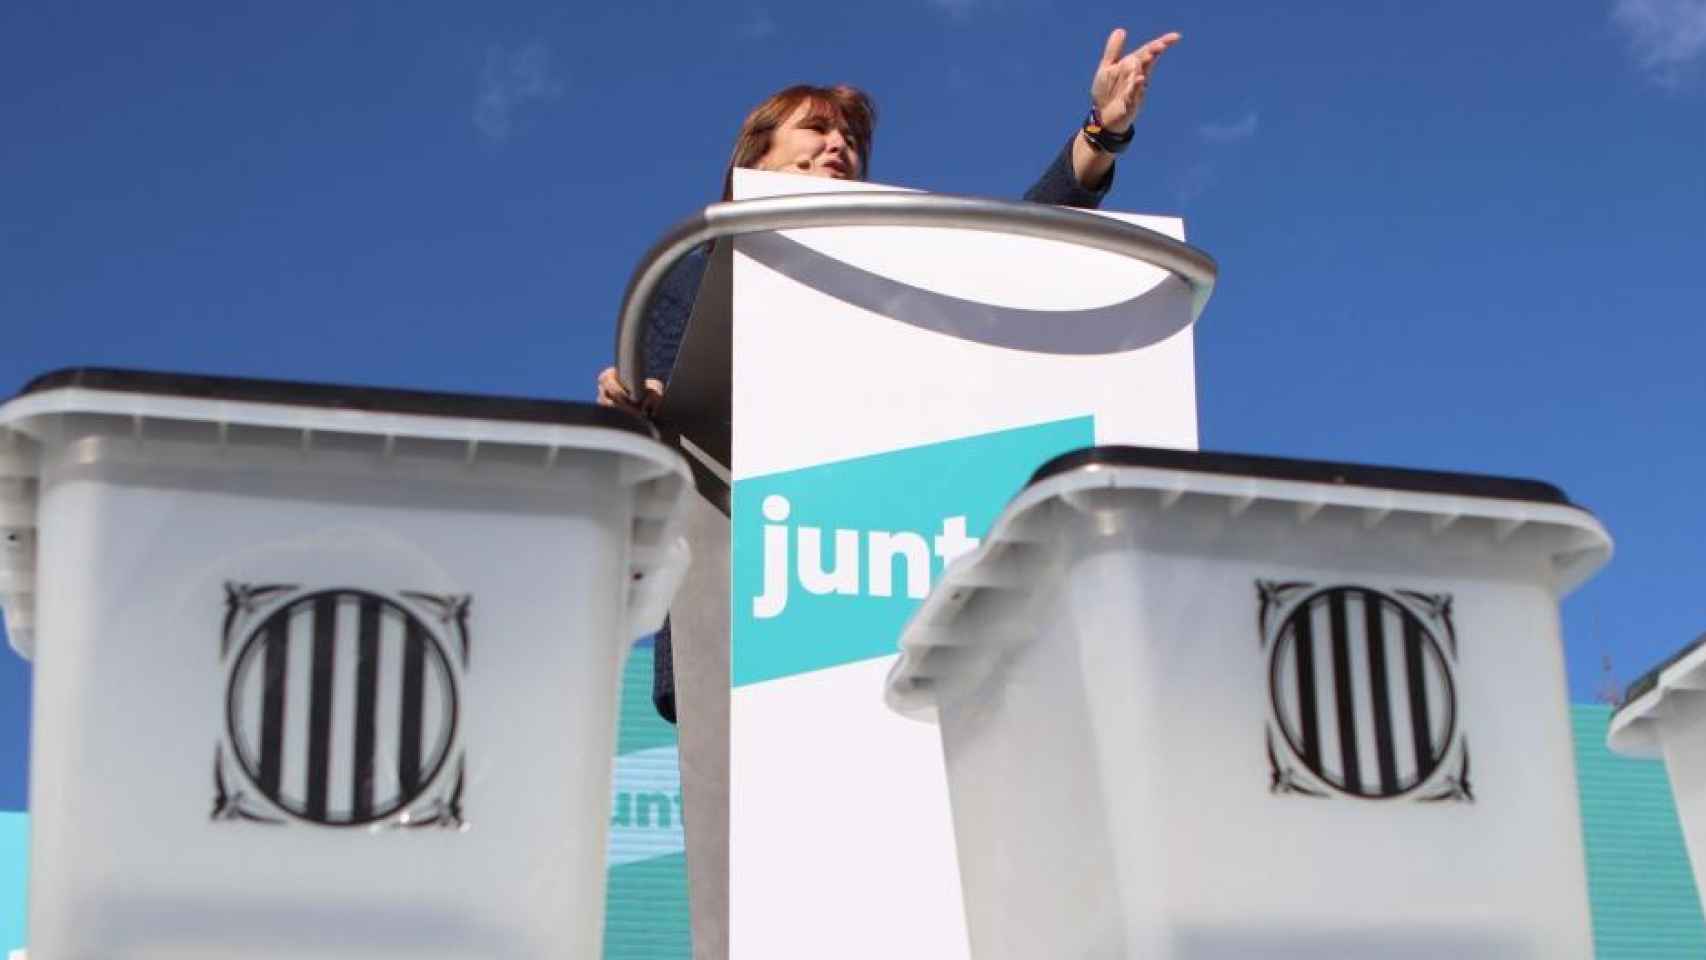 Laura Borràs, candidata de JxCat, en un acto electoral.